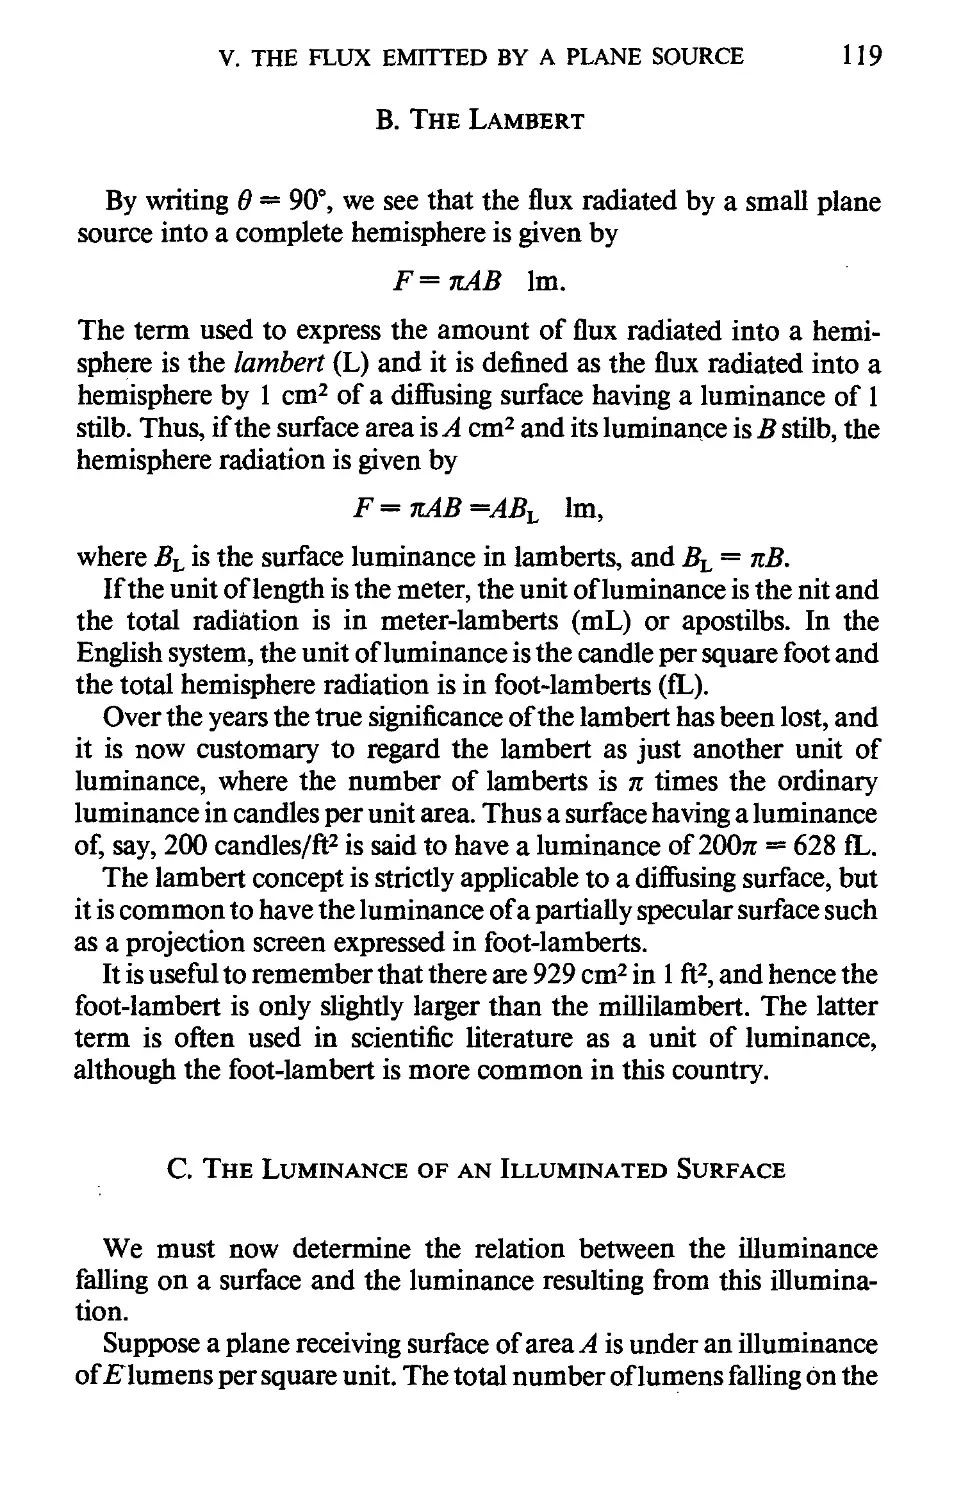 B. The Lambert
С. The Luminance of an Illuminated Surface